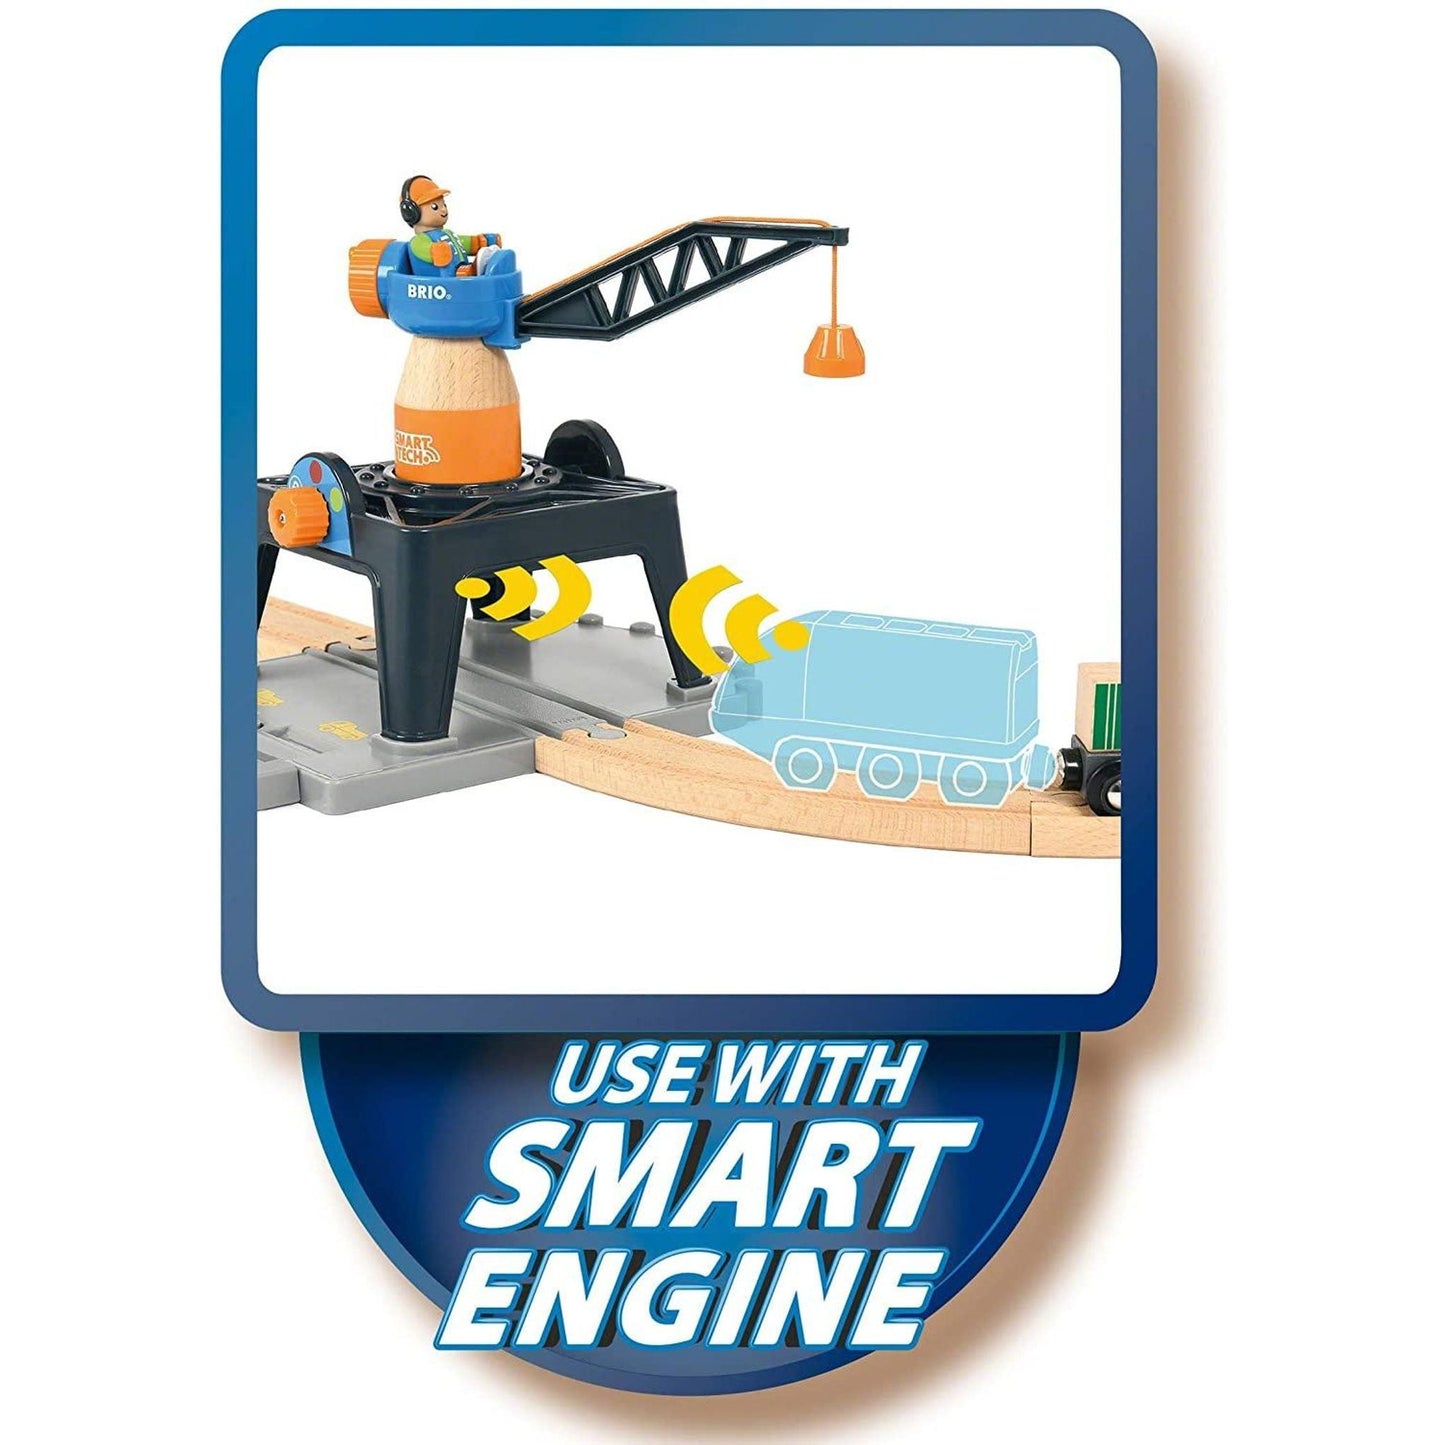 BRIO Smart Tech - Smart Tower Crane - Toybox Tales